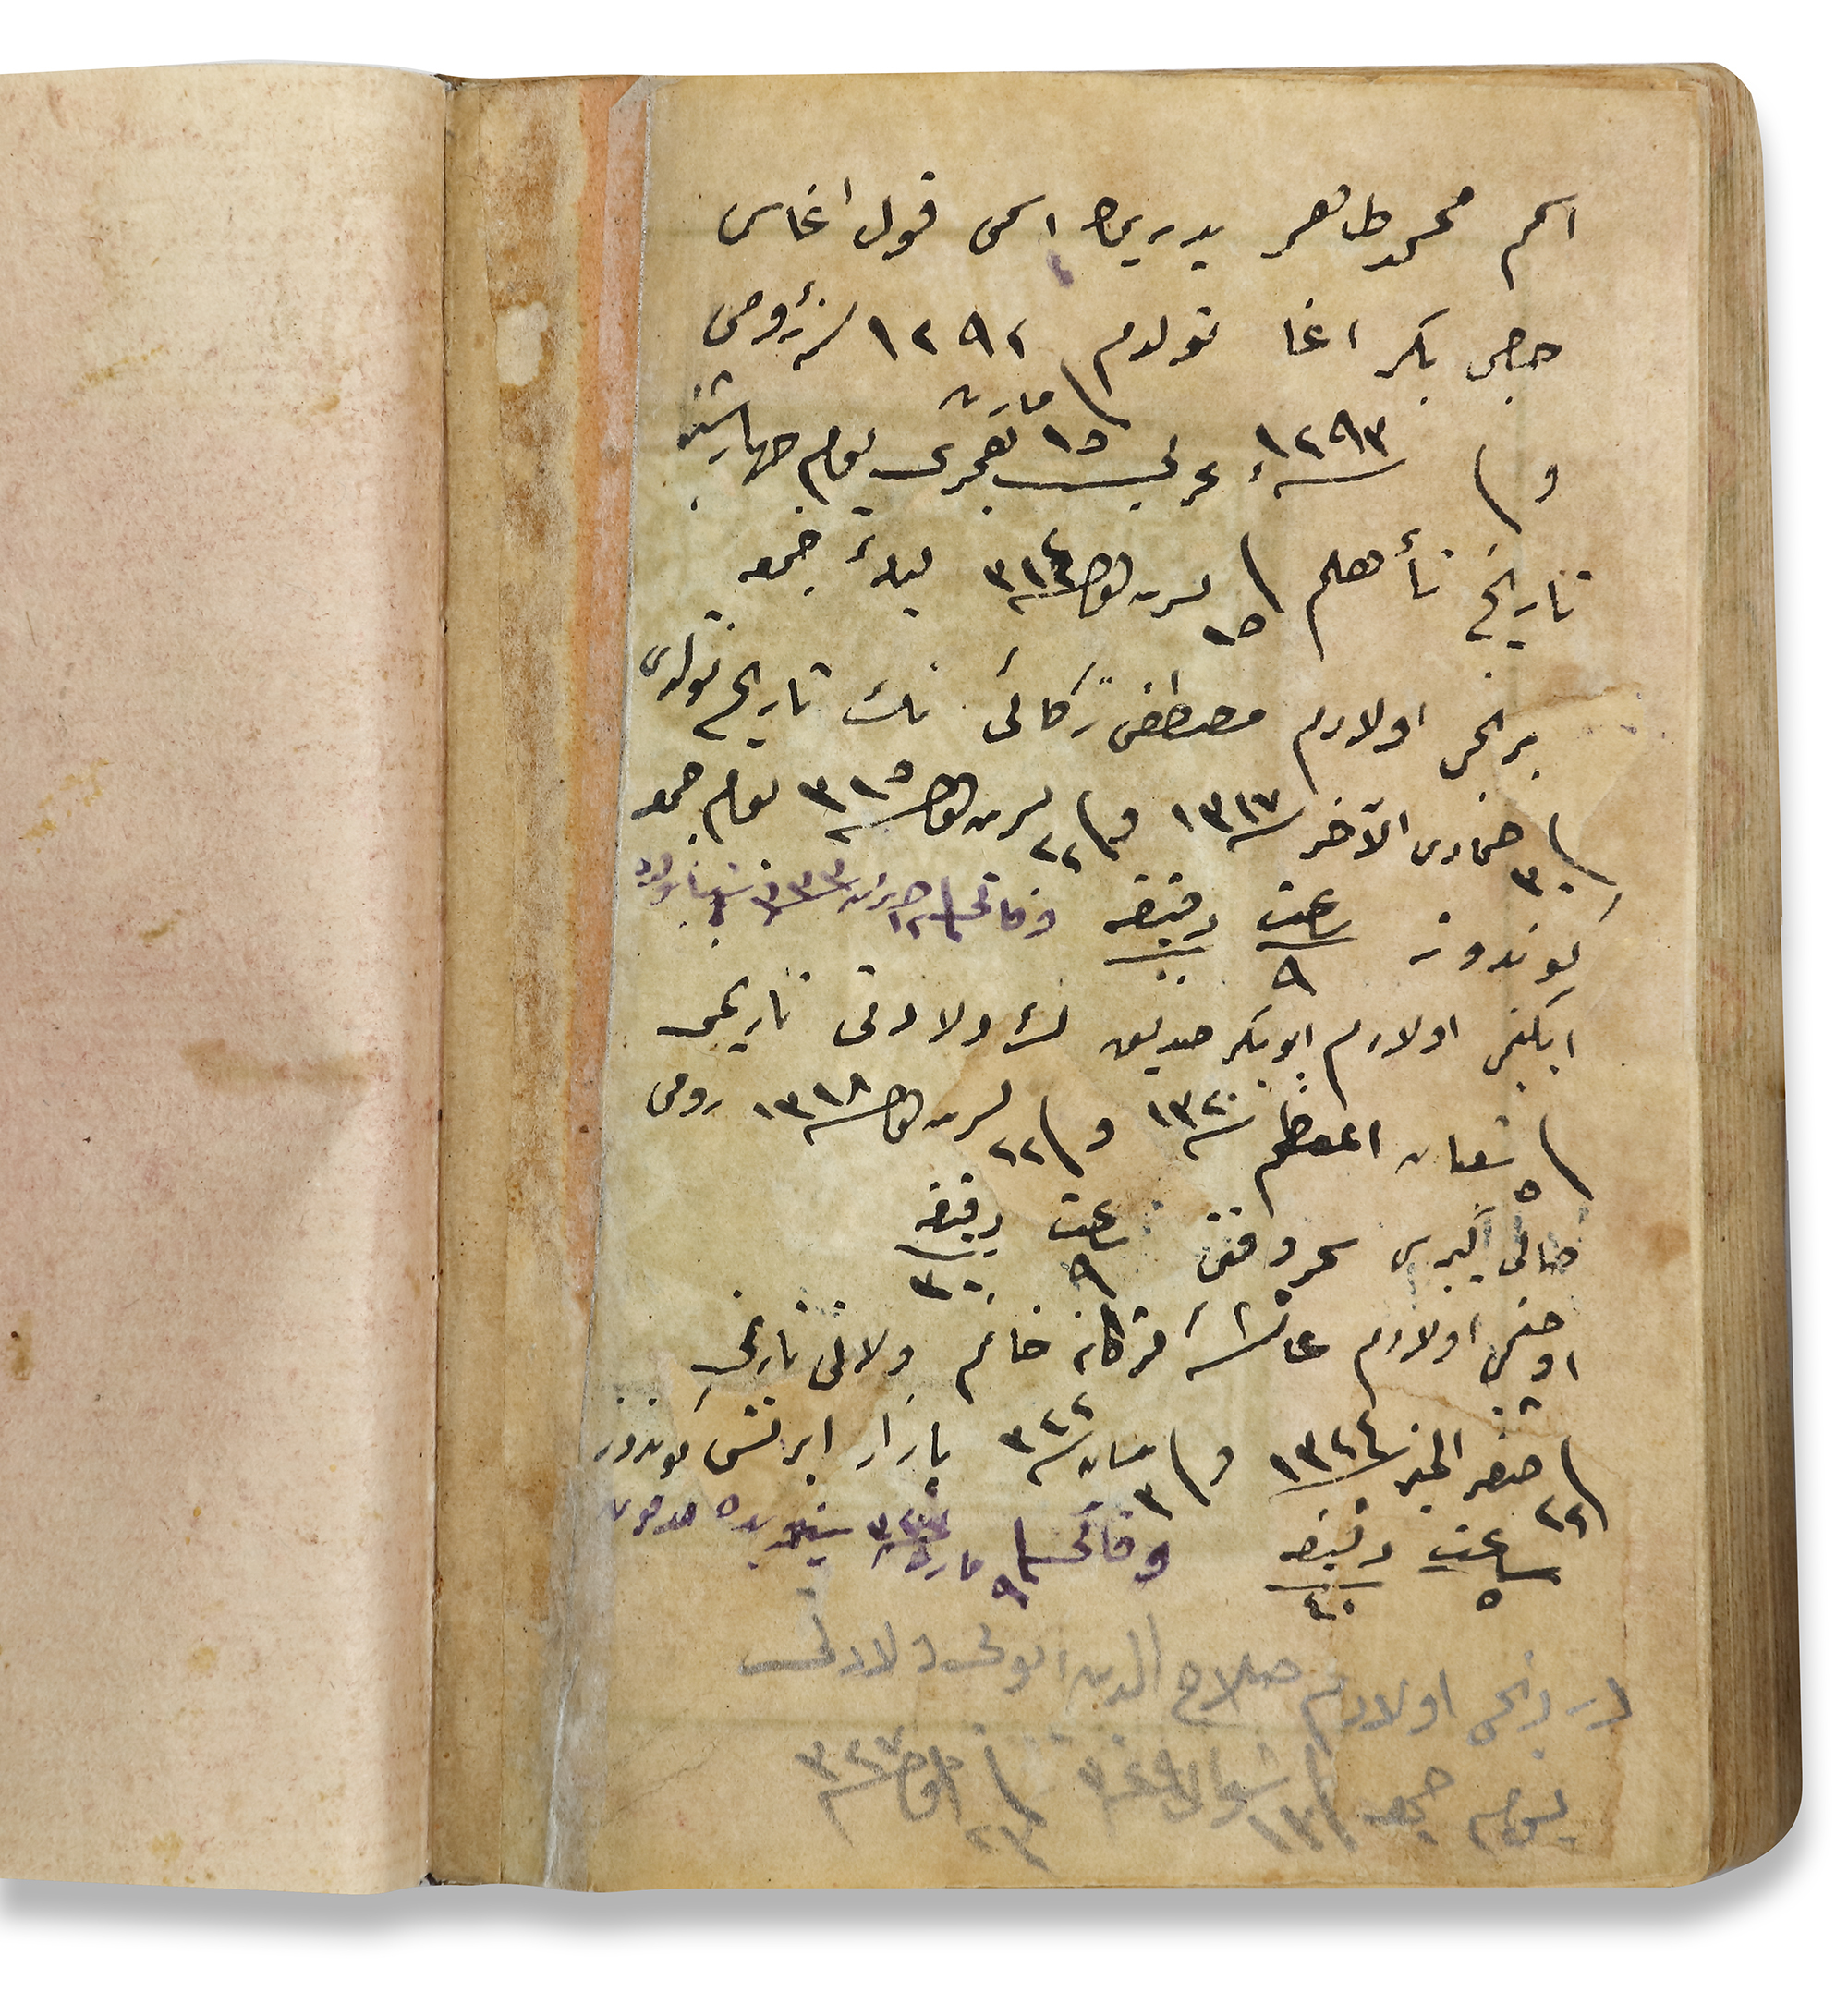 A SMALL ILLUMINATED QURAN, OTTOMAN TURKEY, DATED 22ND SHA'BAN 1249/4TH JANUARY 1834 - Image 16 of 16